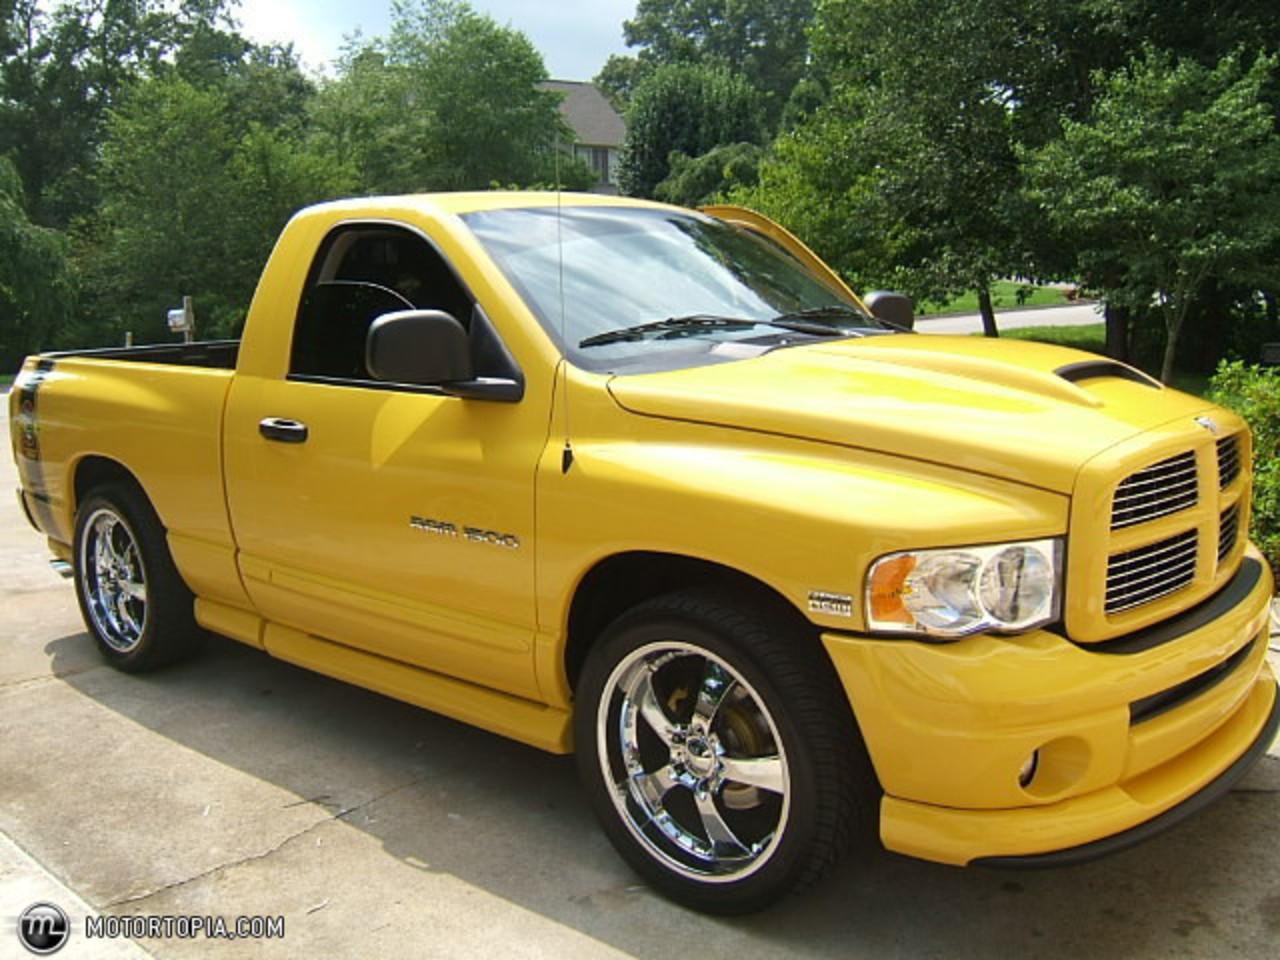 Photo of a 2004 Dodge Ram 1500 SLT (Banana). 10,932 views; 3 comments